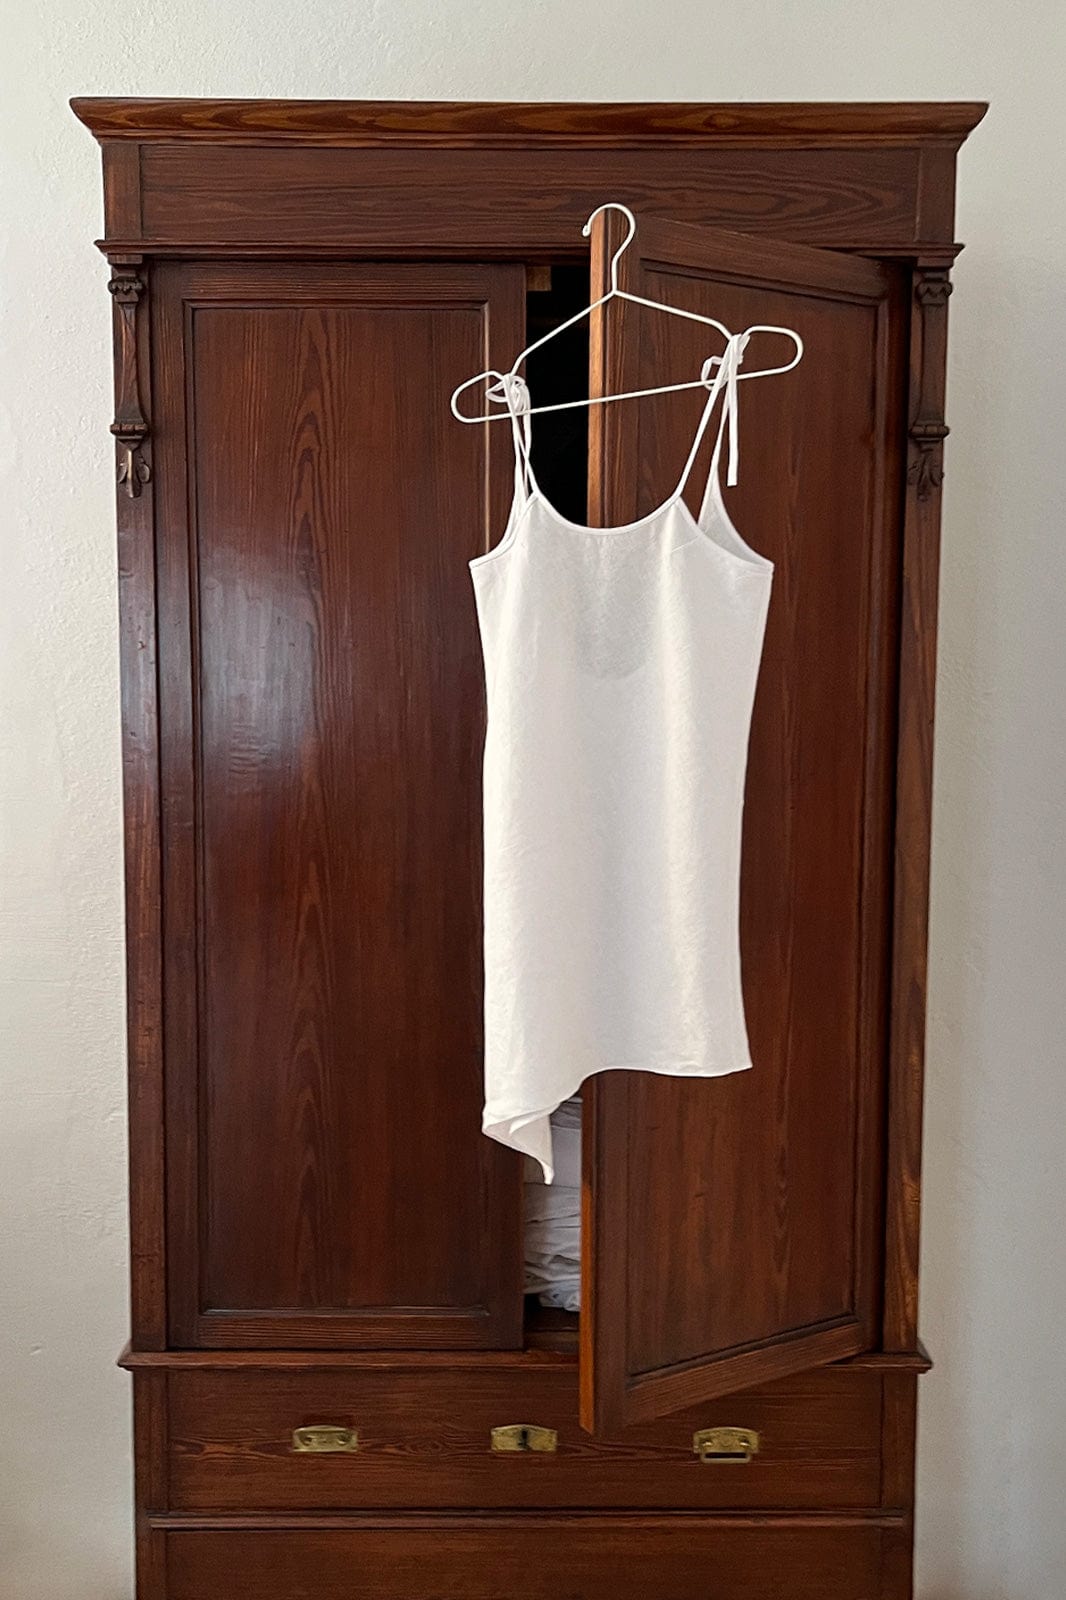 arkitaip Maxi Dresses The Daisy Lounge Slip Dress in white - Sample